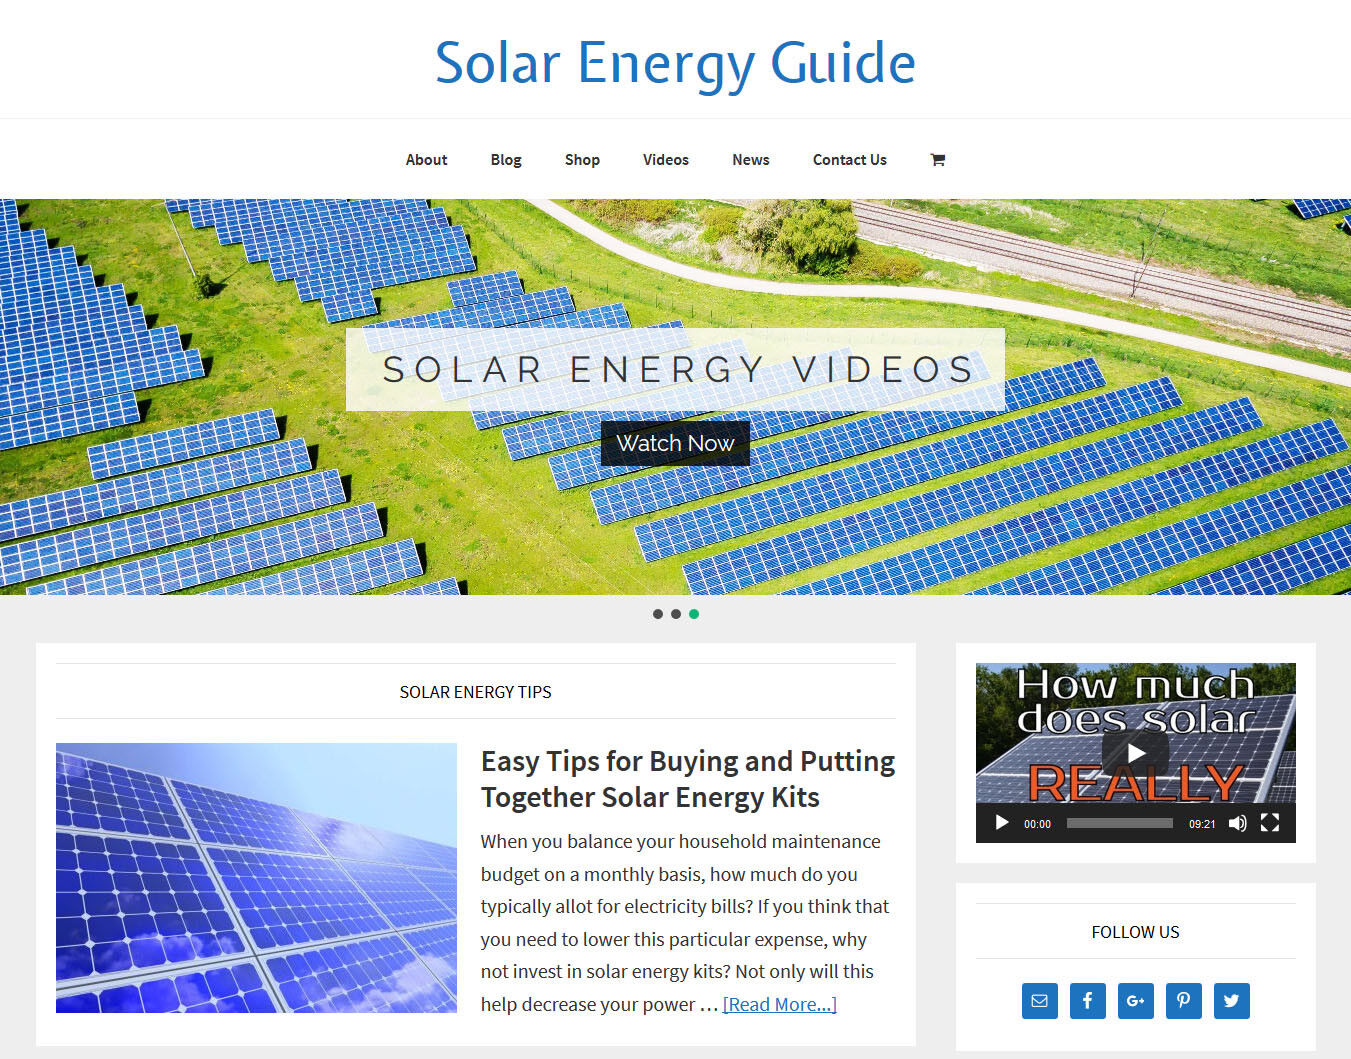 [NEW DESIGN] * SOLAR ENERGY * store blog website business for sale AUTO CONTENT